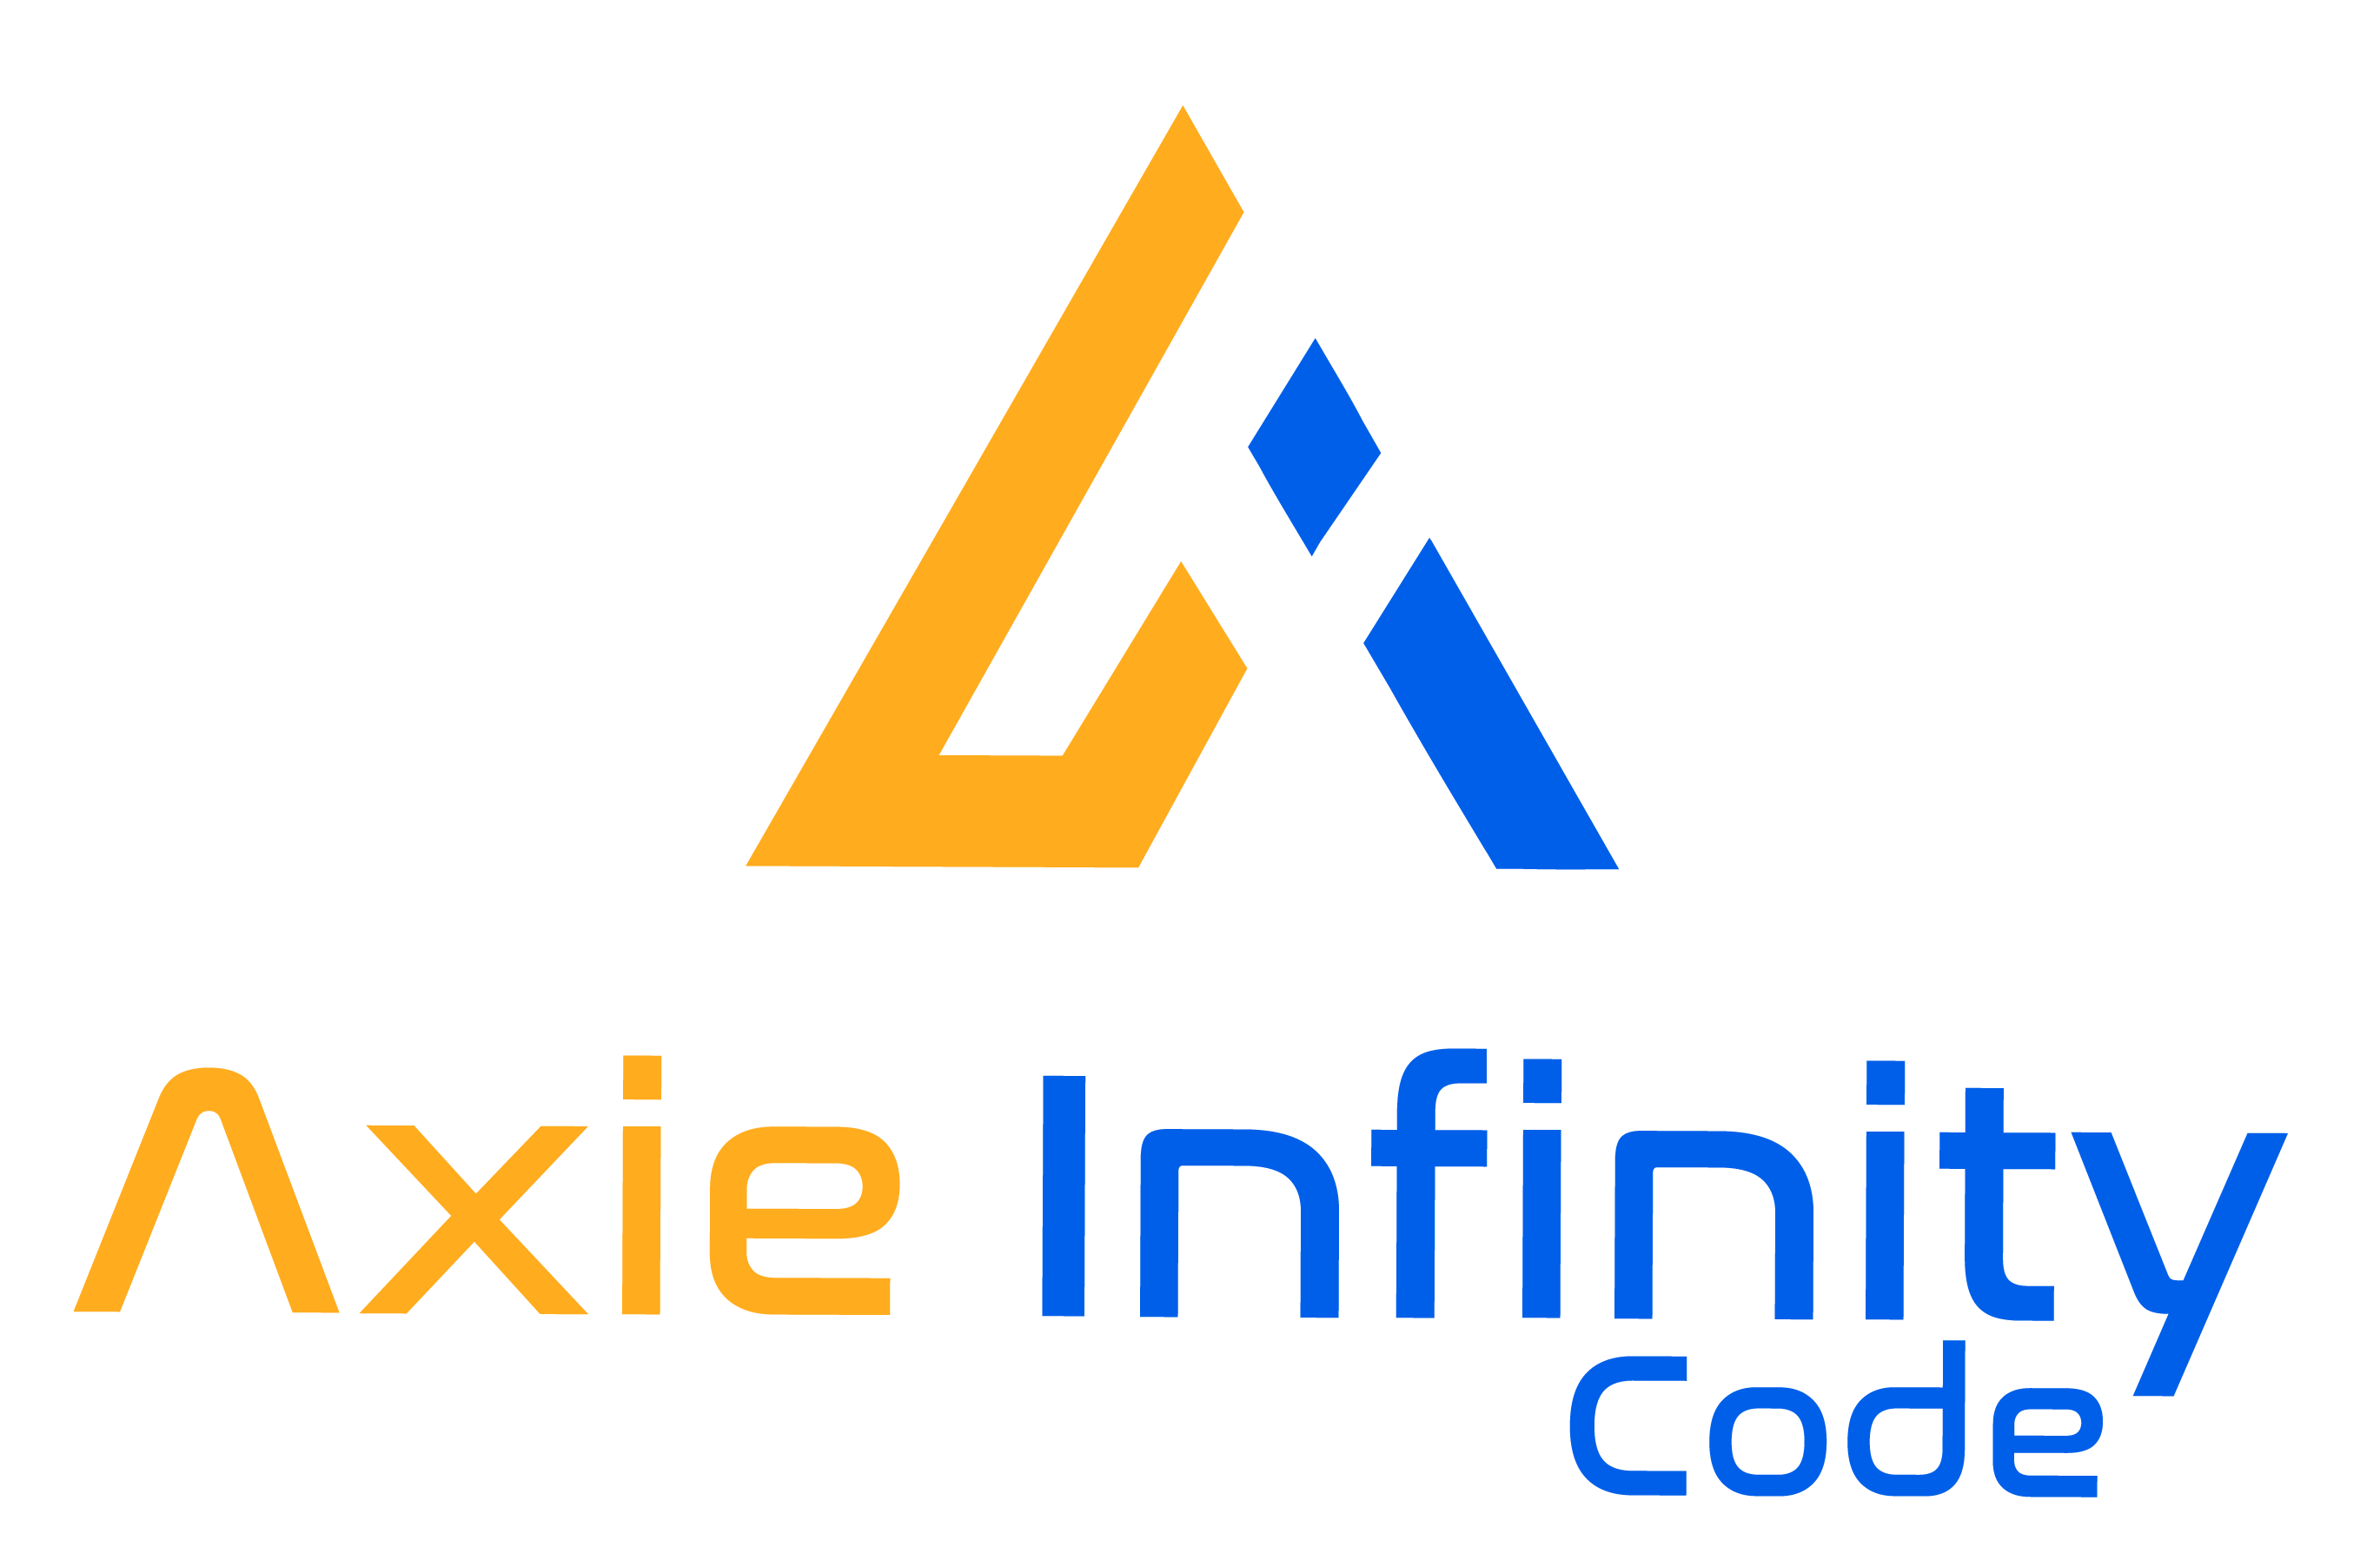 Axie Infinity Code - The Axie Infinity Code Team